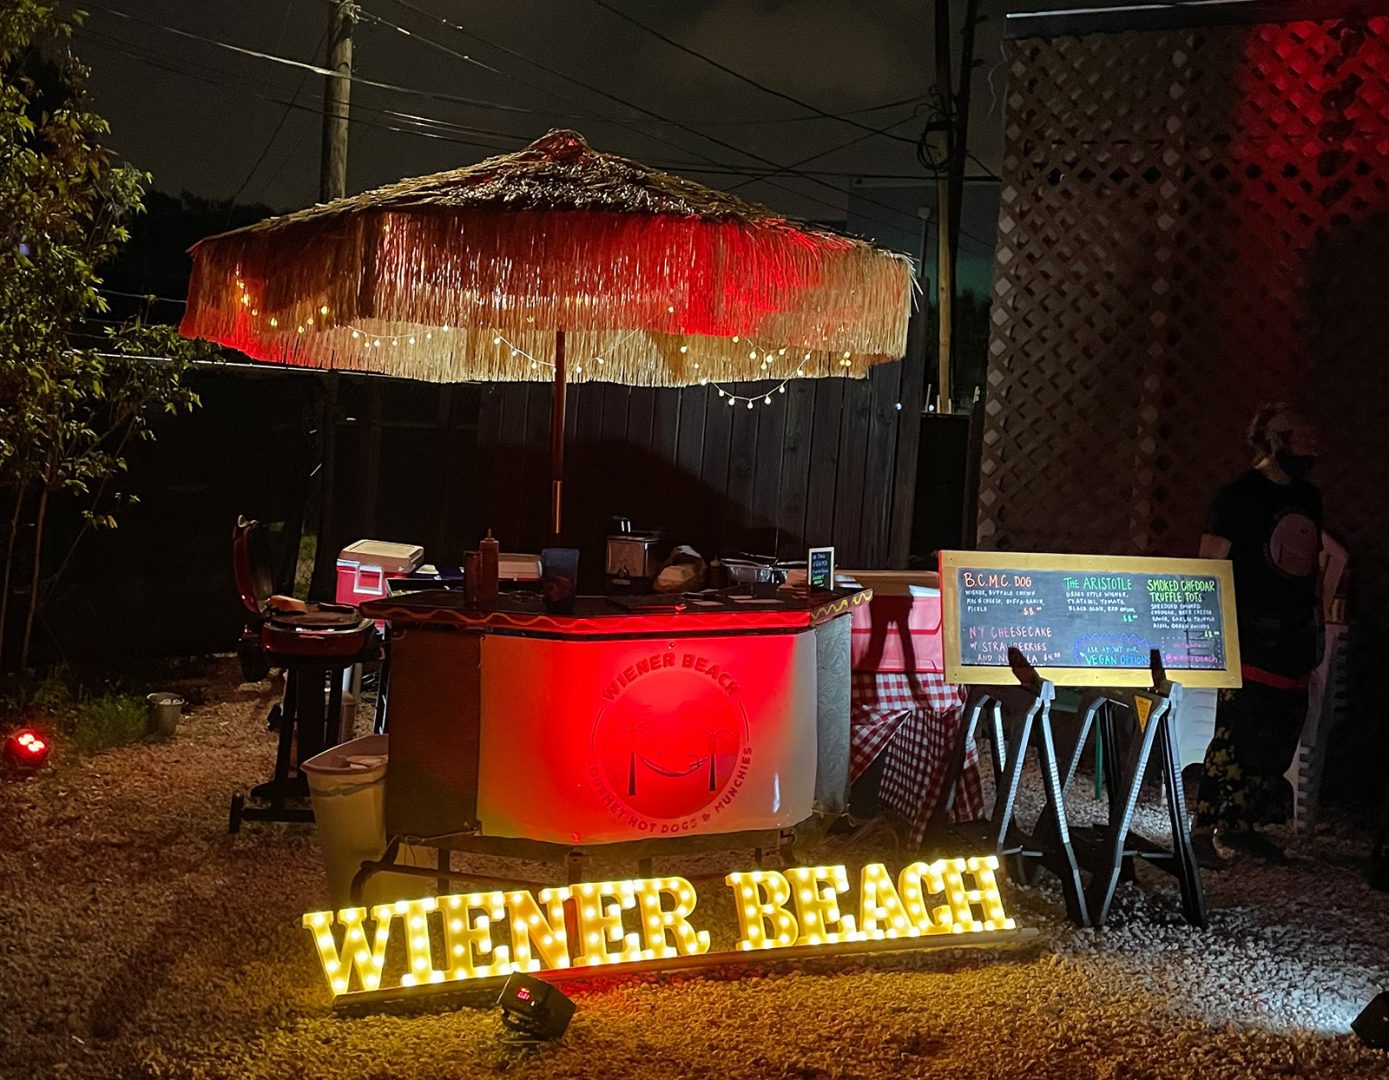 Pop-up store with Wiener Beach in lights